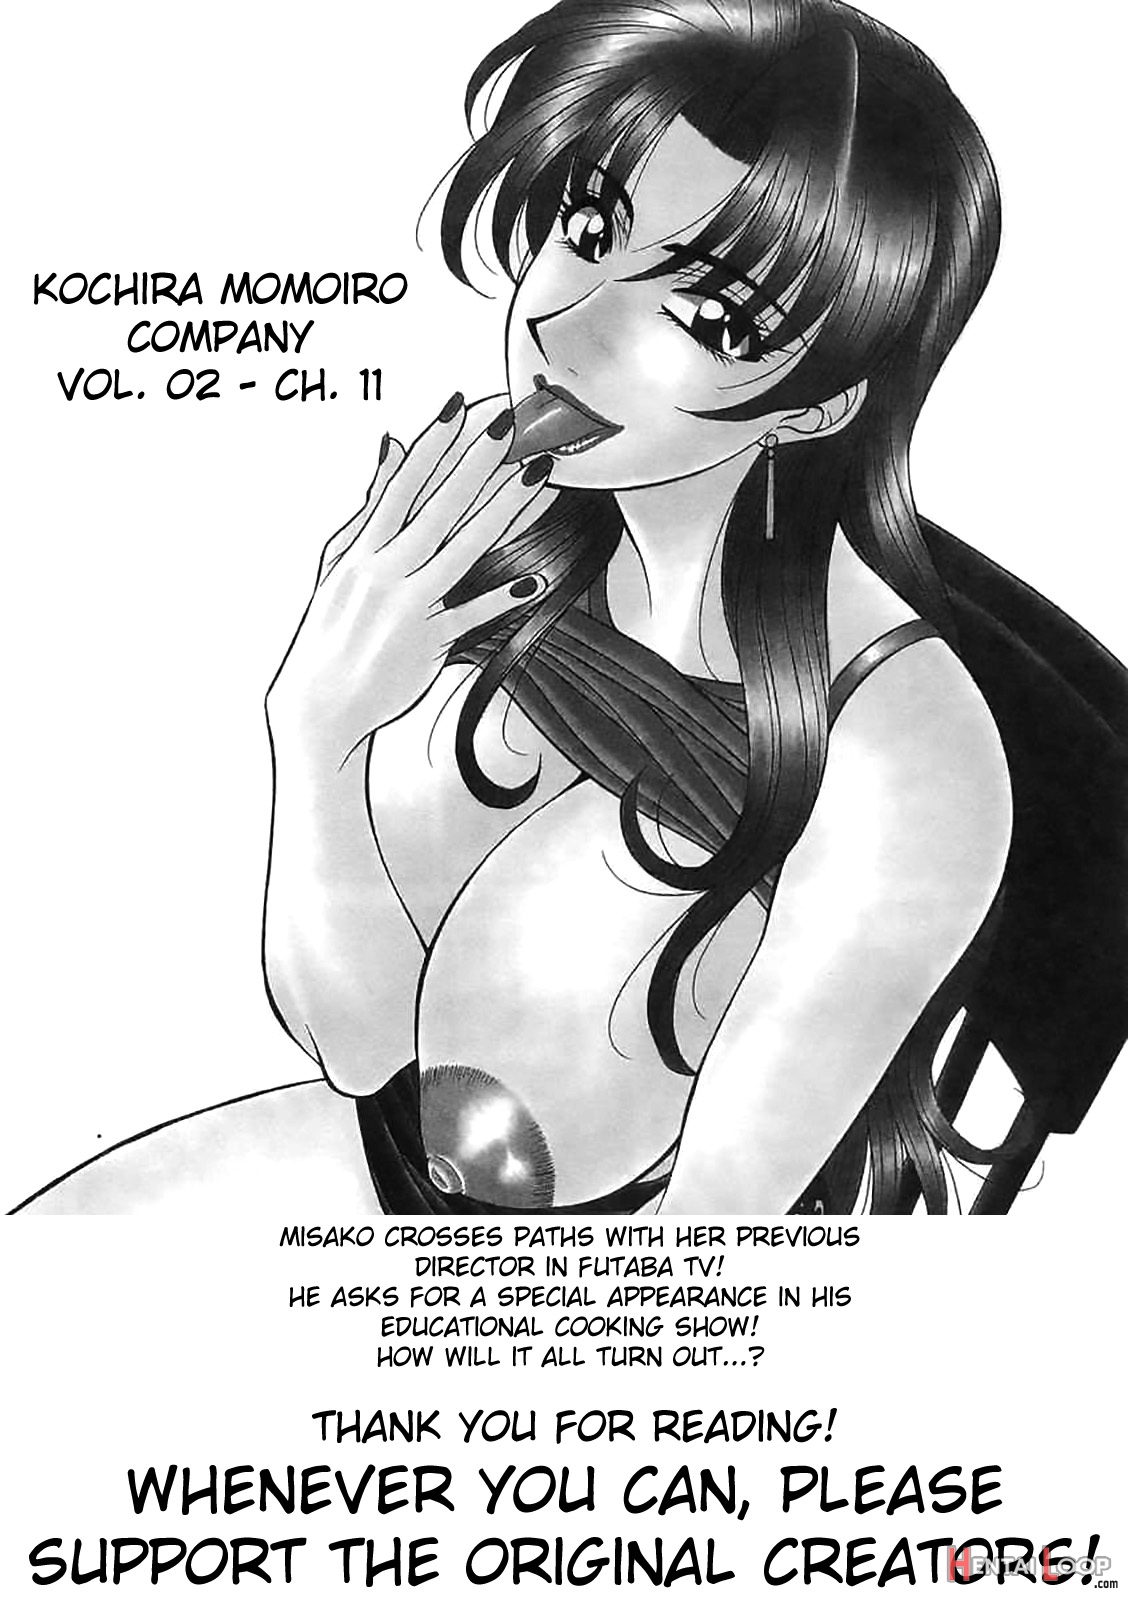 Kochira Momoiro Company Vol. 2 Ch.1-4 page 25